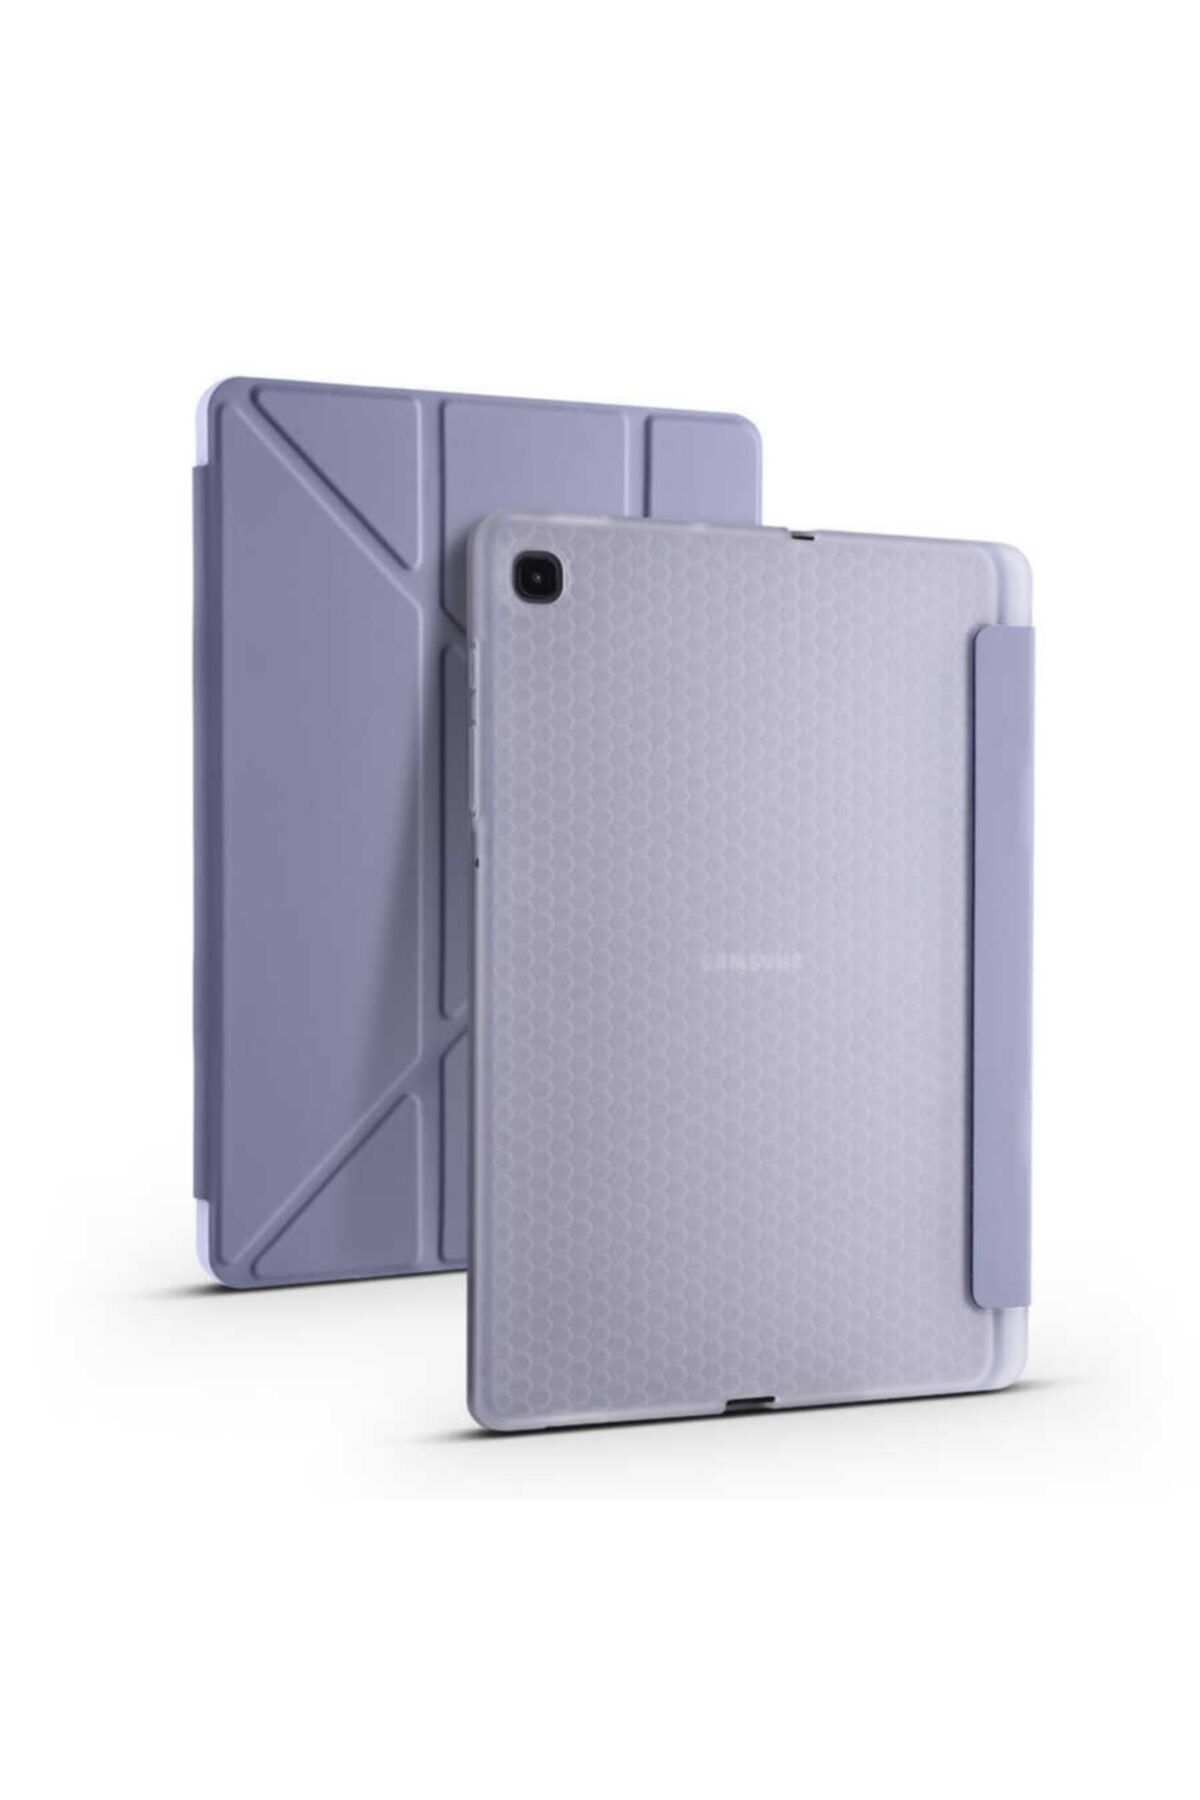 TEKNETSTORE Samsung Galaxy Tab S6 Lite Sm-p610 10.4" Kılıf Kalem Bölmeli Standlı Katlanabilir Kalemlikli Silikon